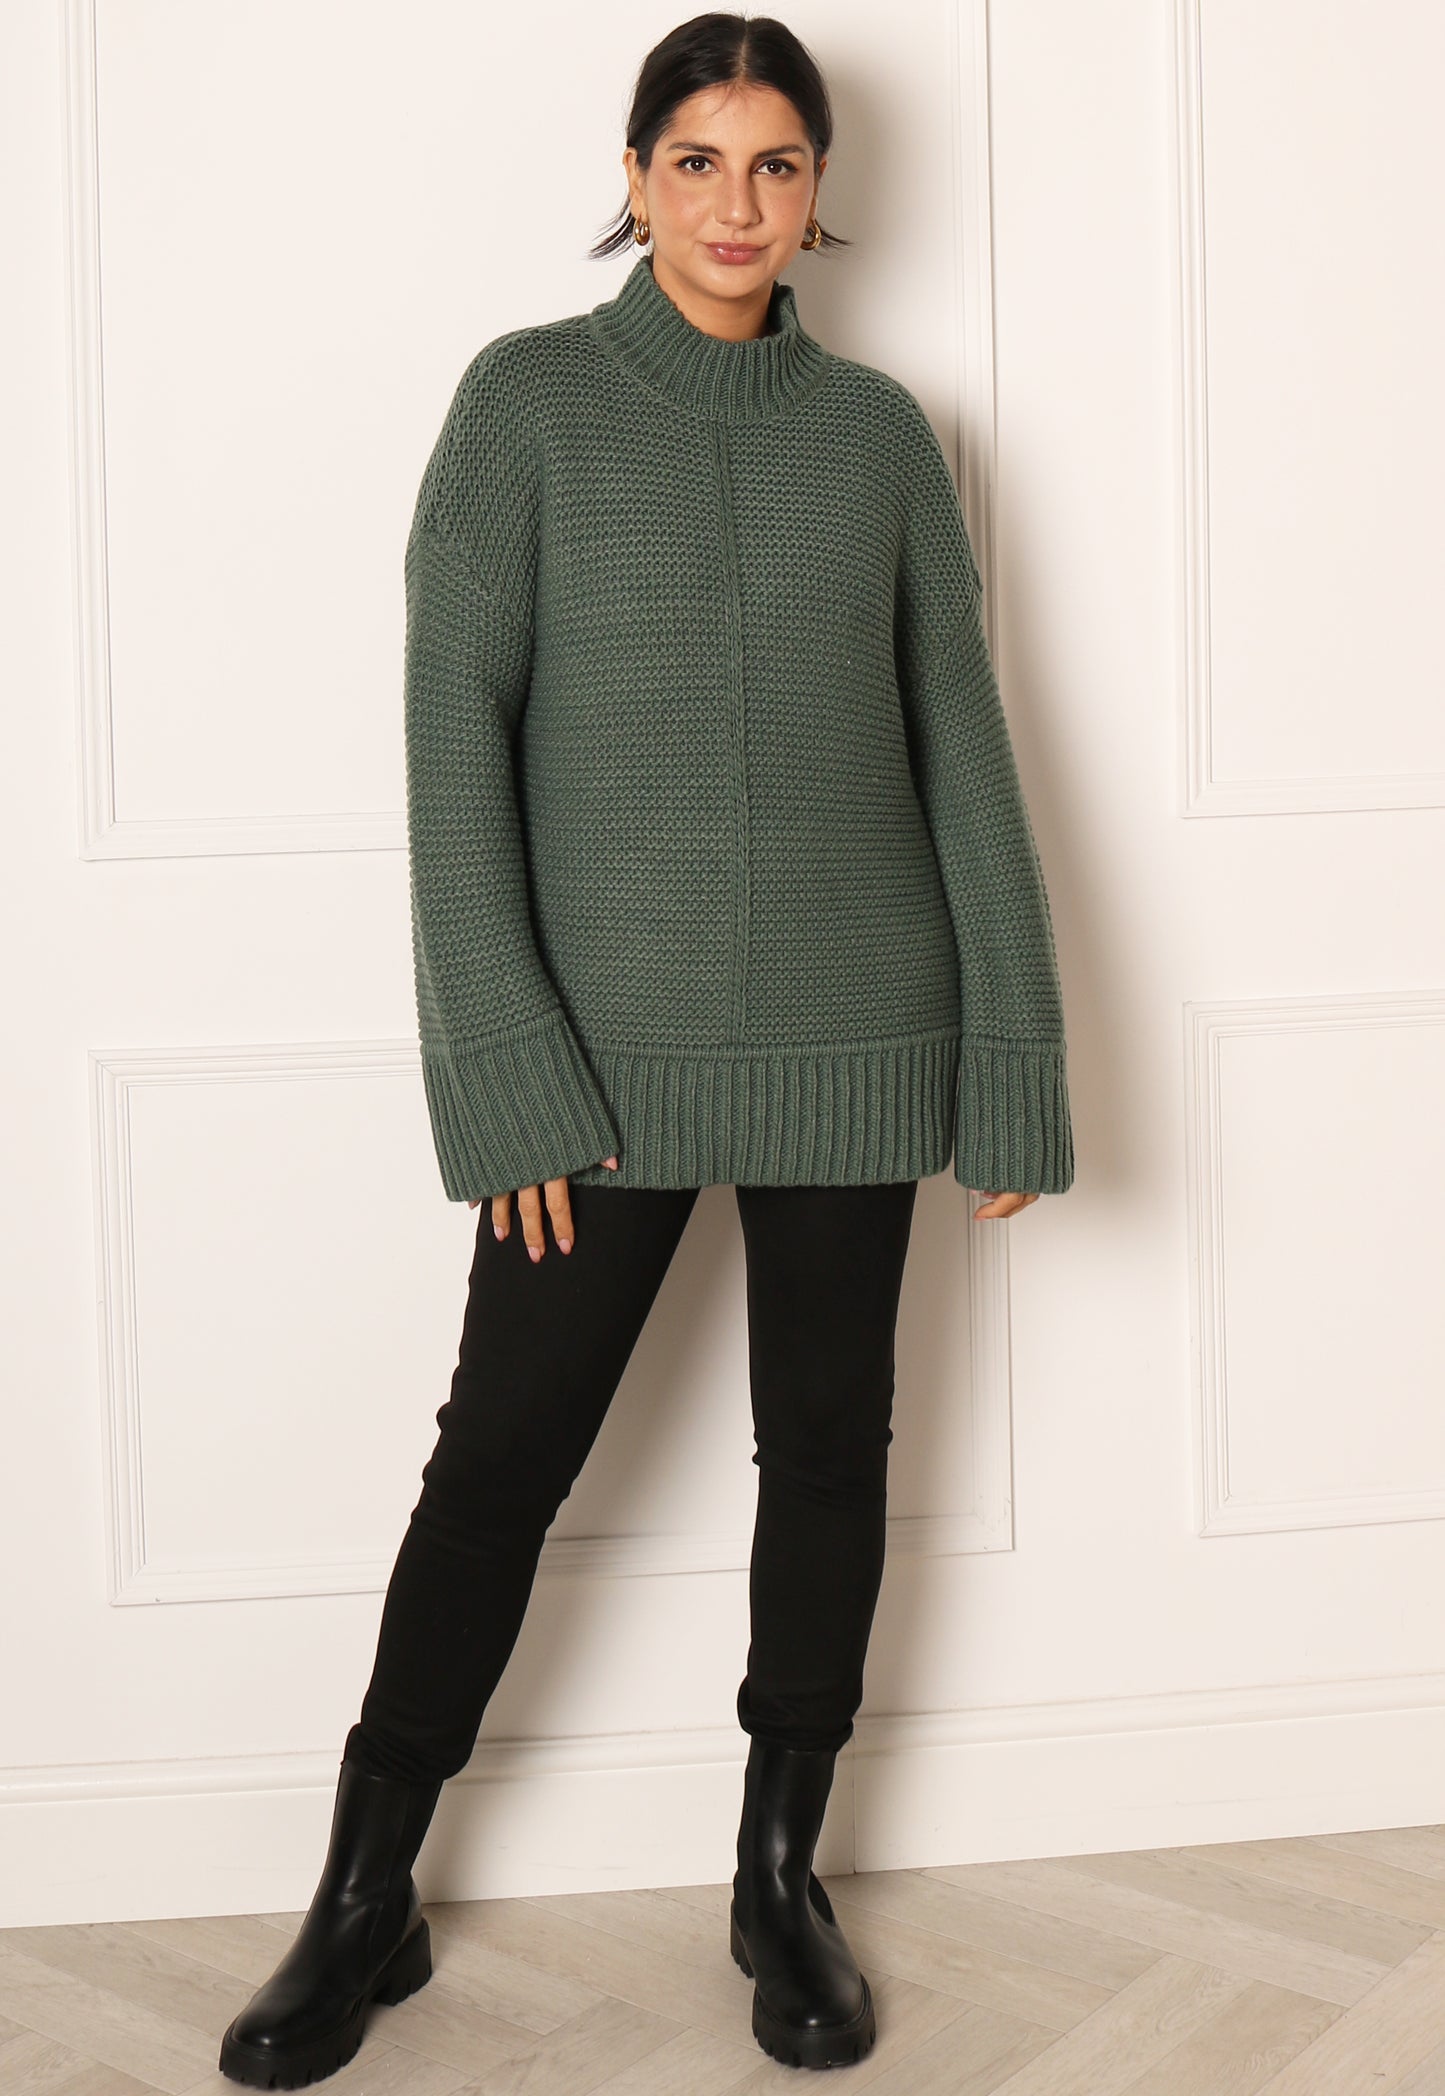 VERO MODA Miranda Longline Chunky Knit Jumper in Green - One Nation Clothing